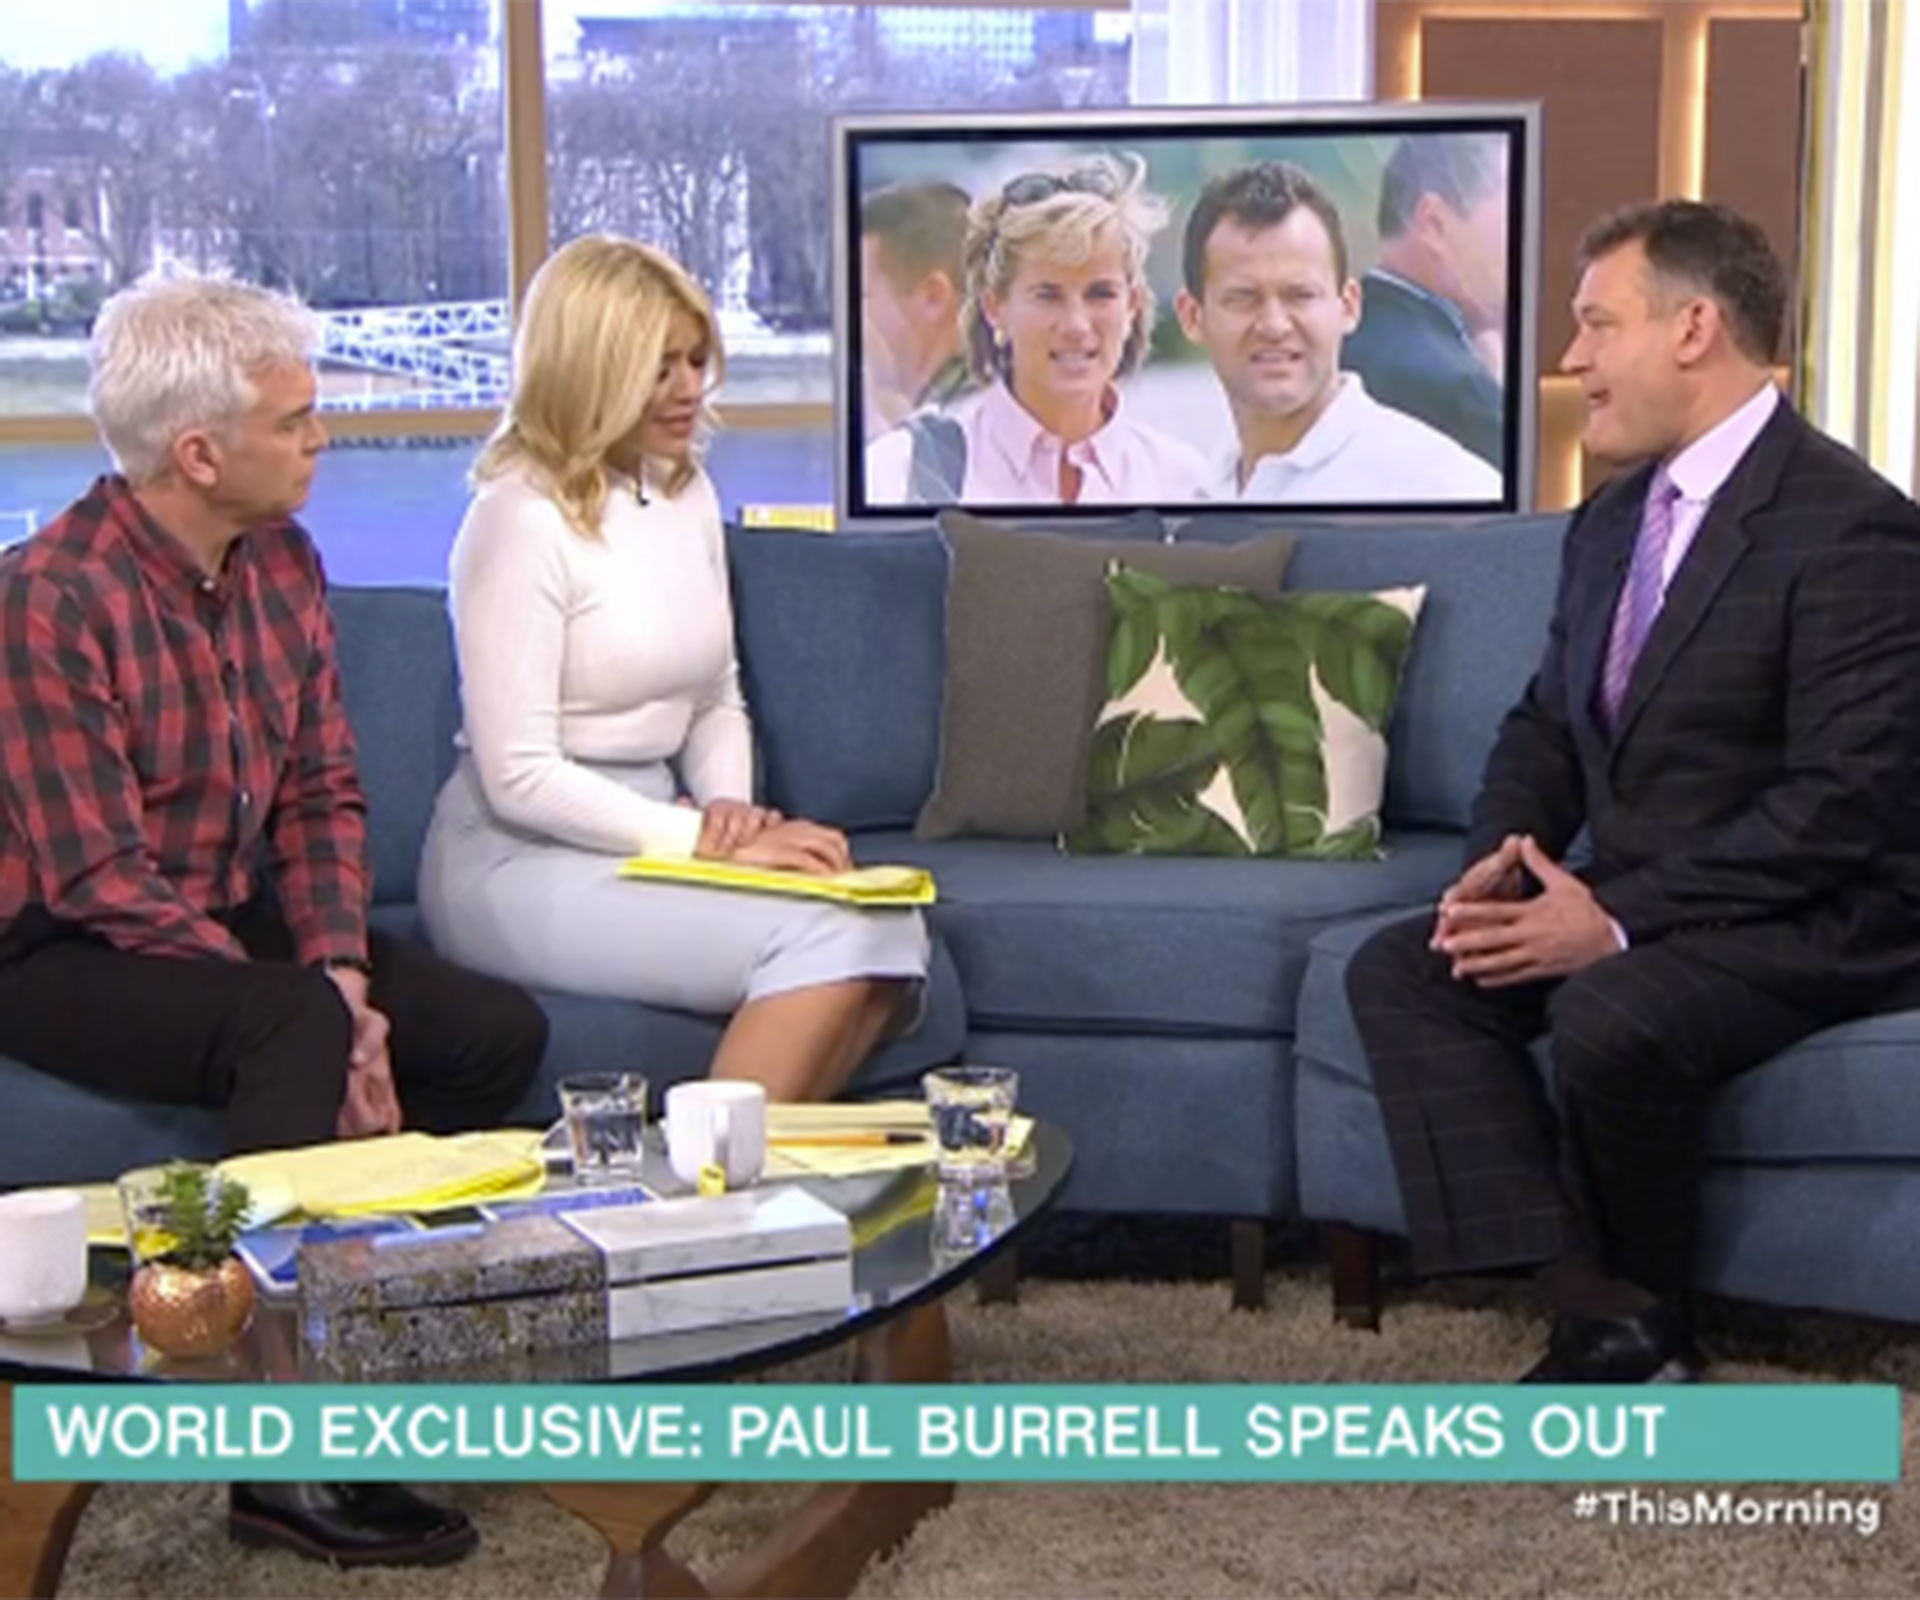 Princess Diana’s former butler Paul Burrell angers UK TV host over 30k appearance fee 